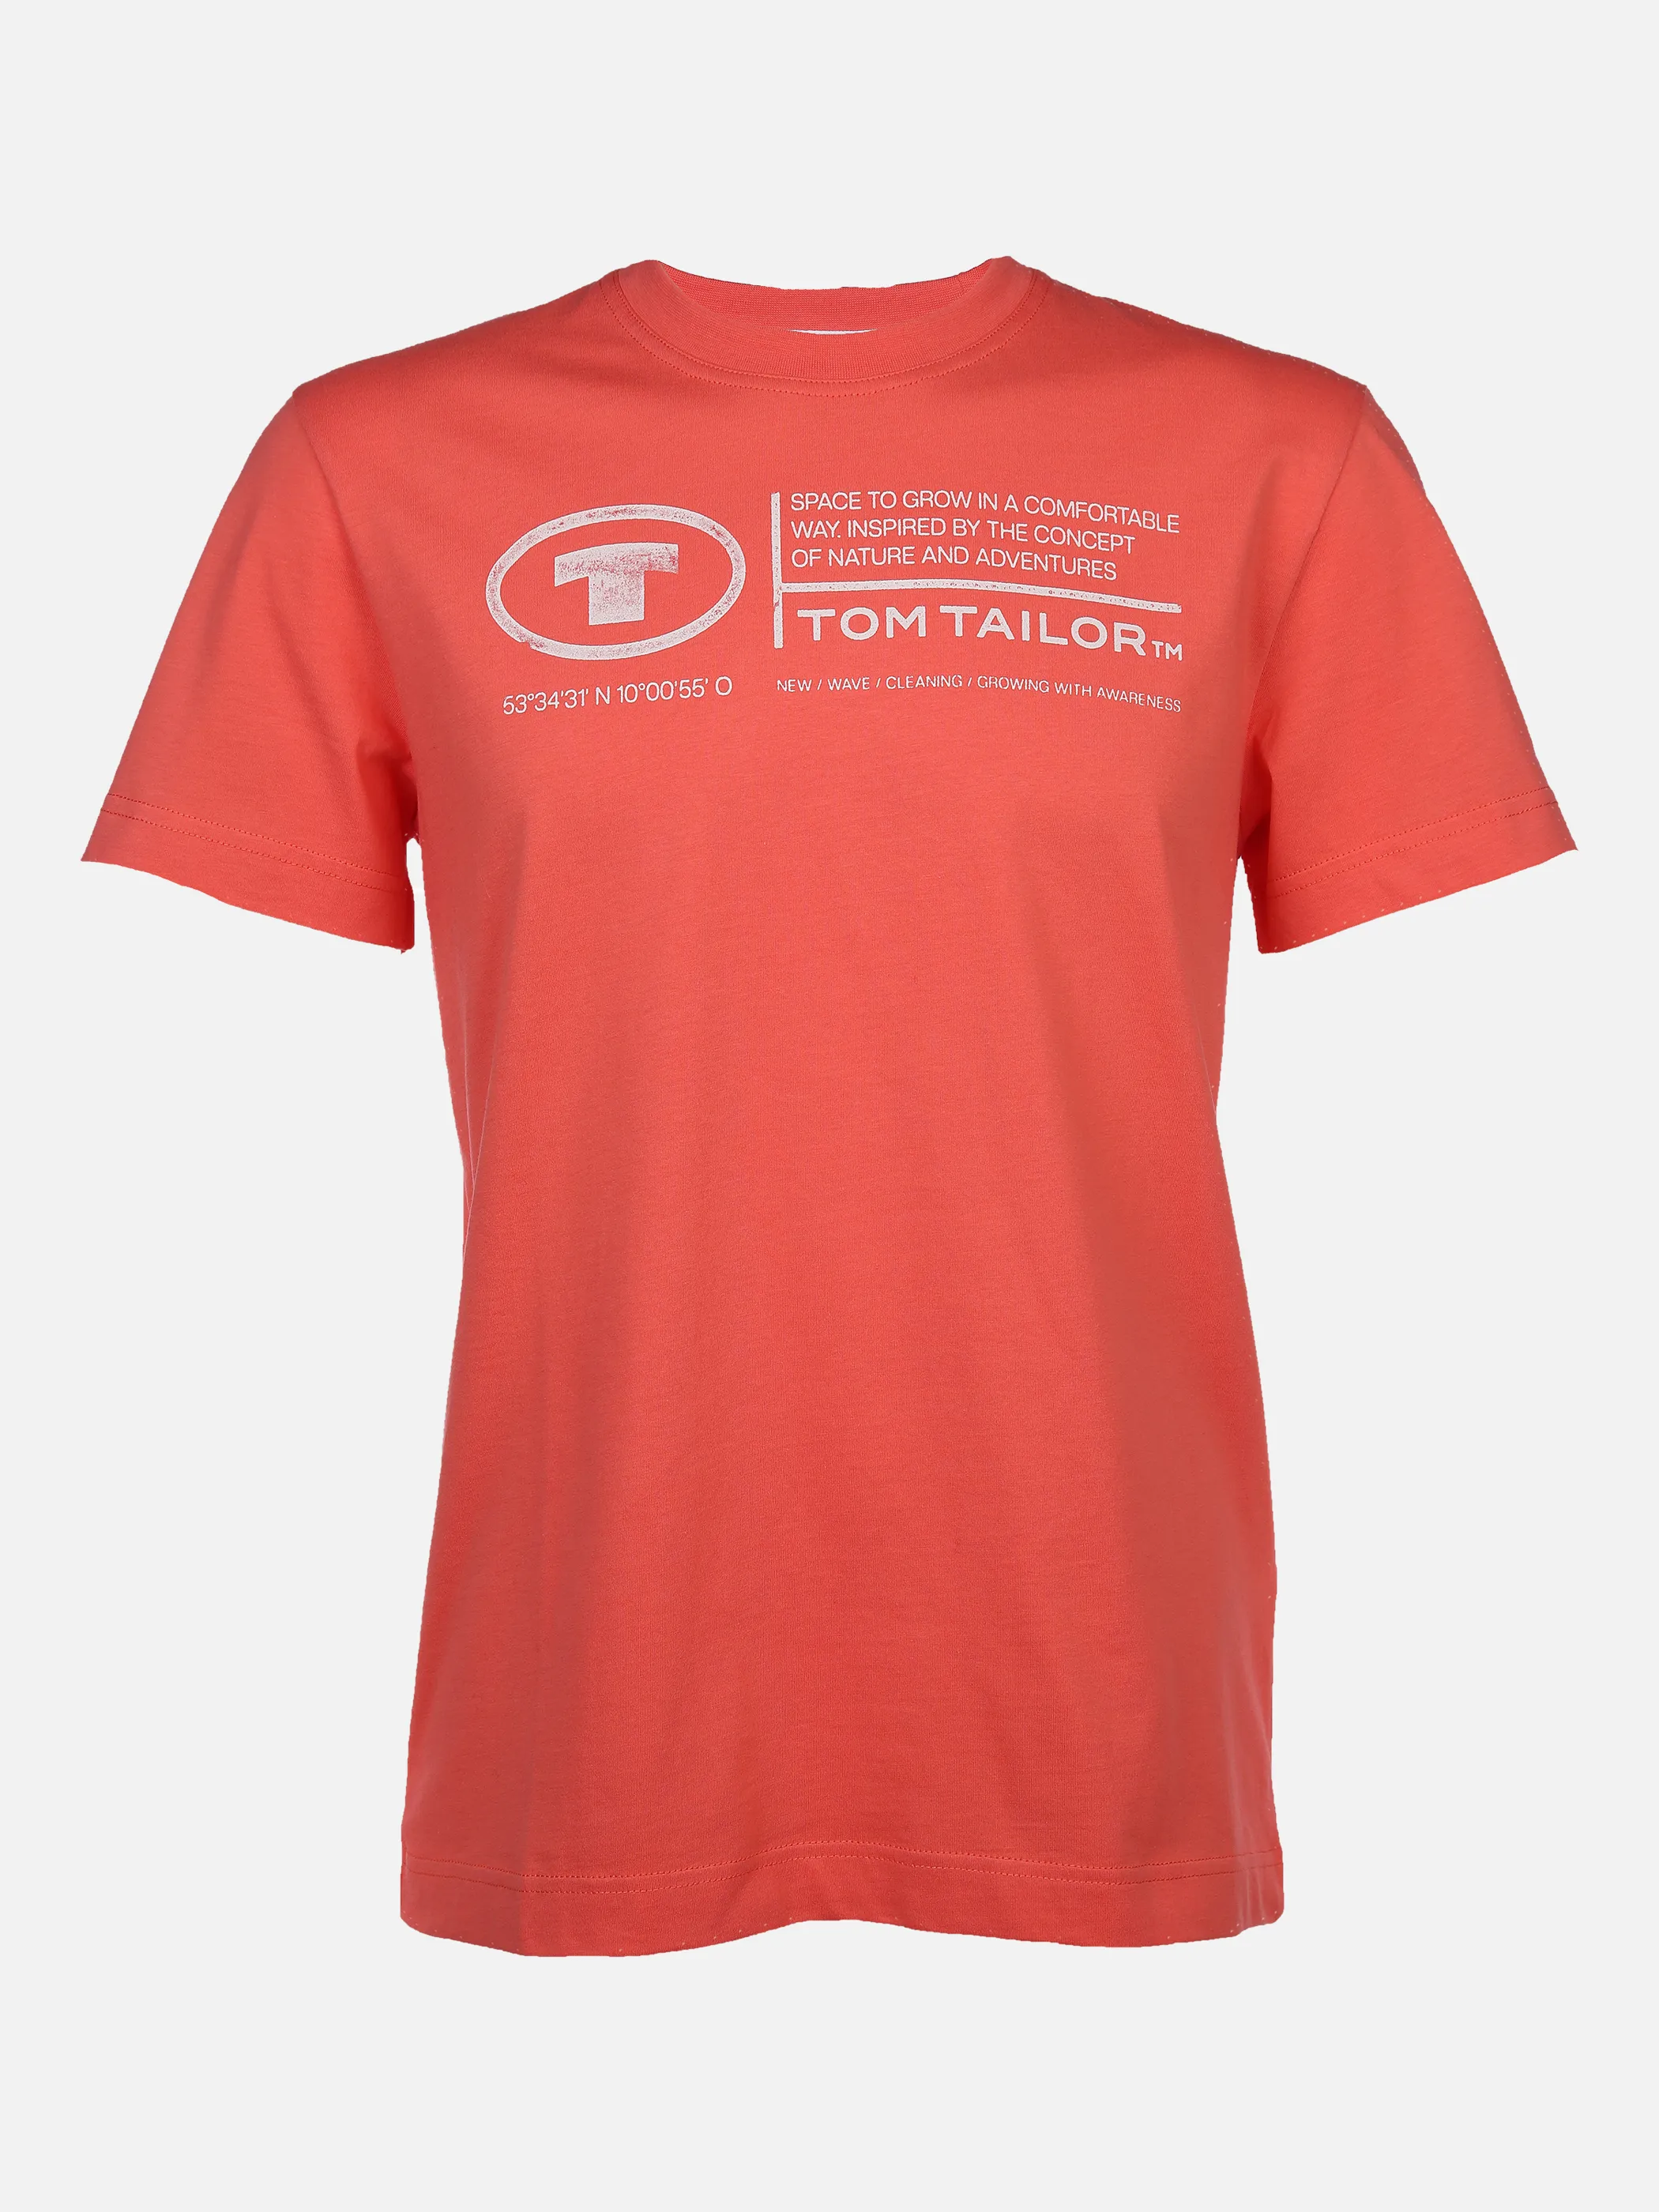 Tom Tailor 1035611 NOS printed crewneck t-shirt Orange 874939 11834 1